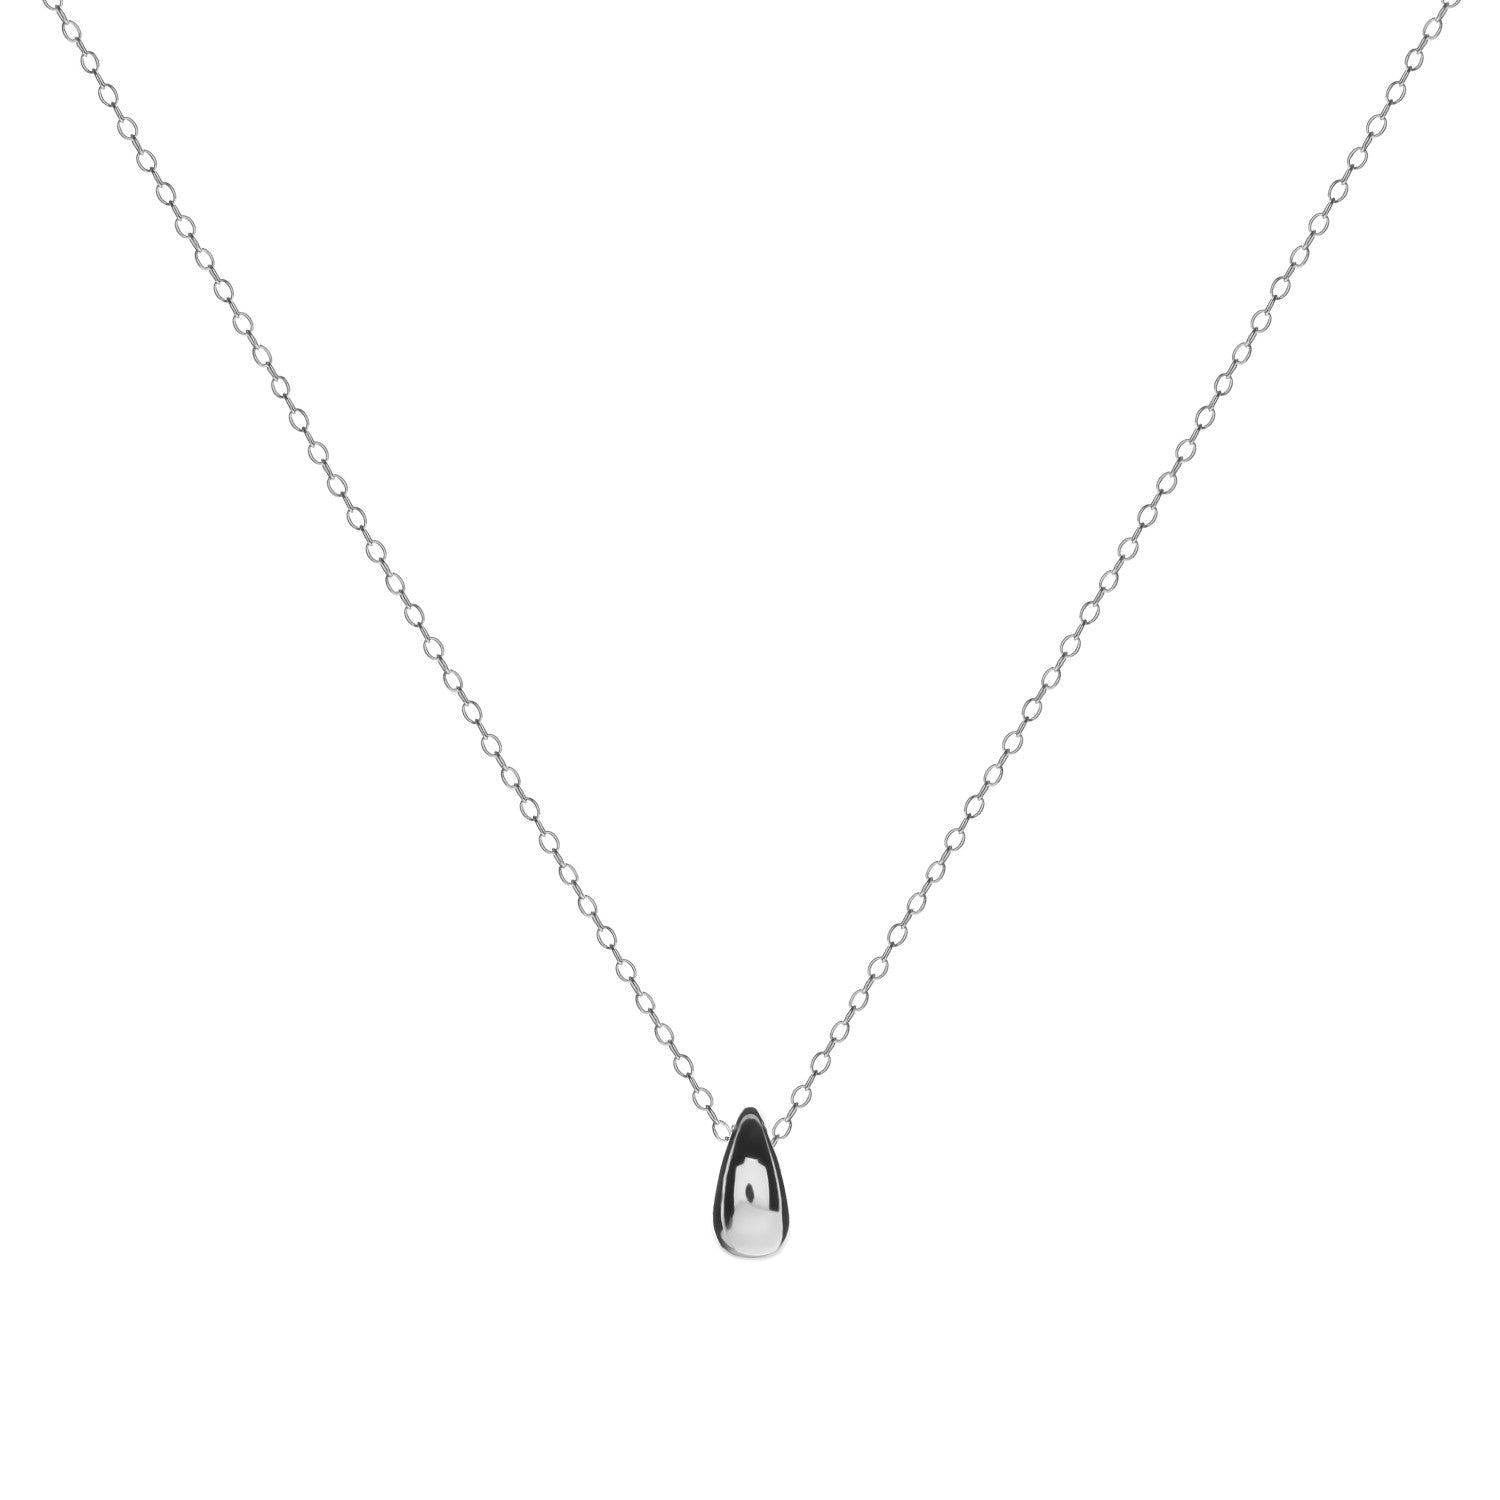 Small plain silver pendants with teardrop design